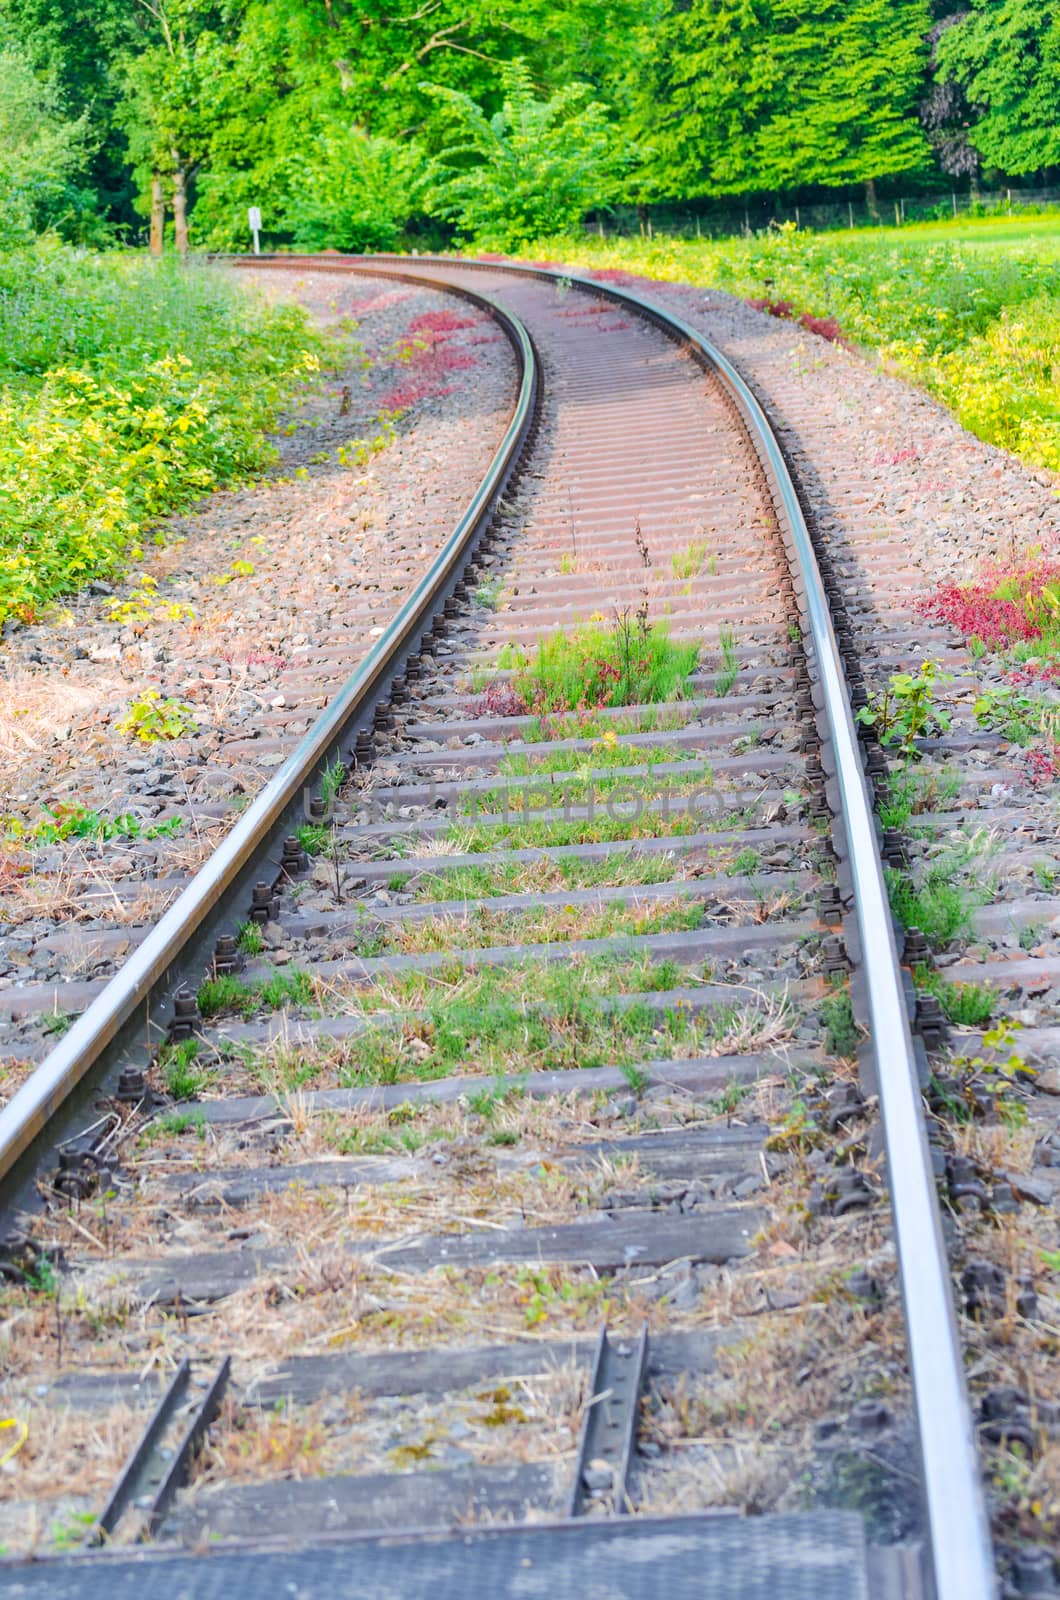 Railroad tracks by JFsPic